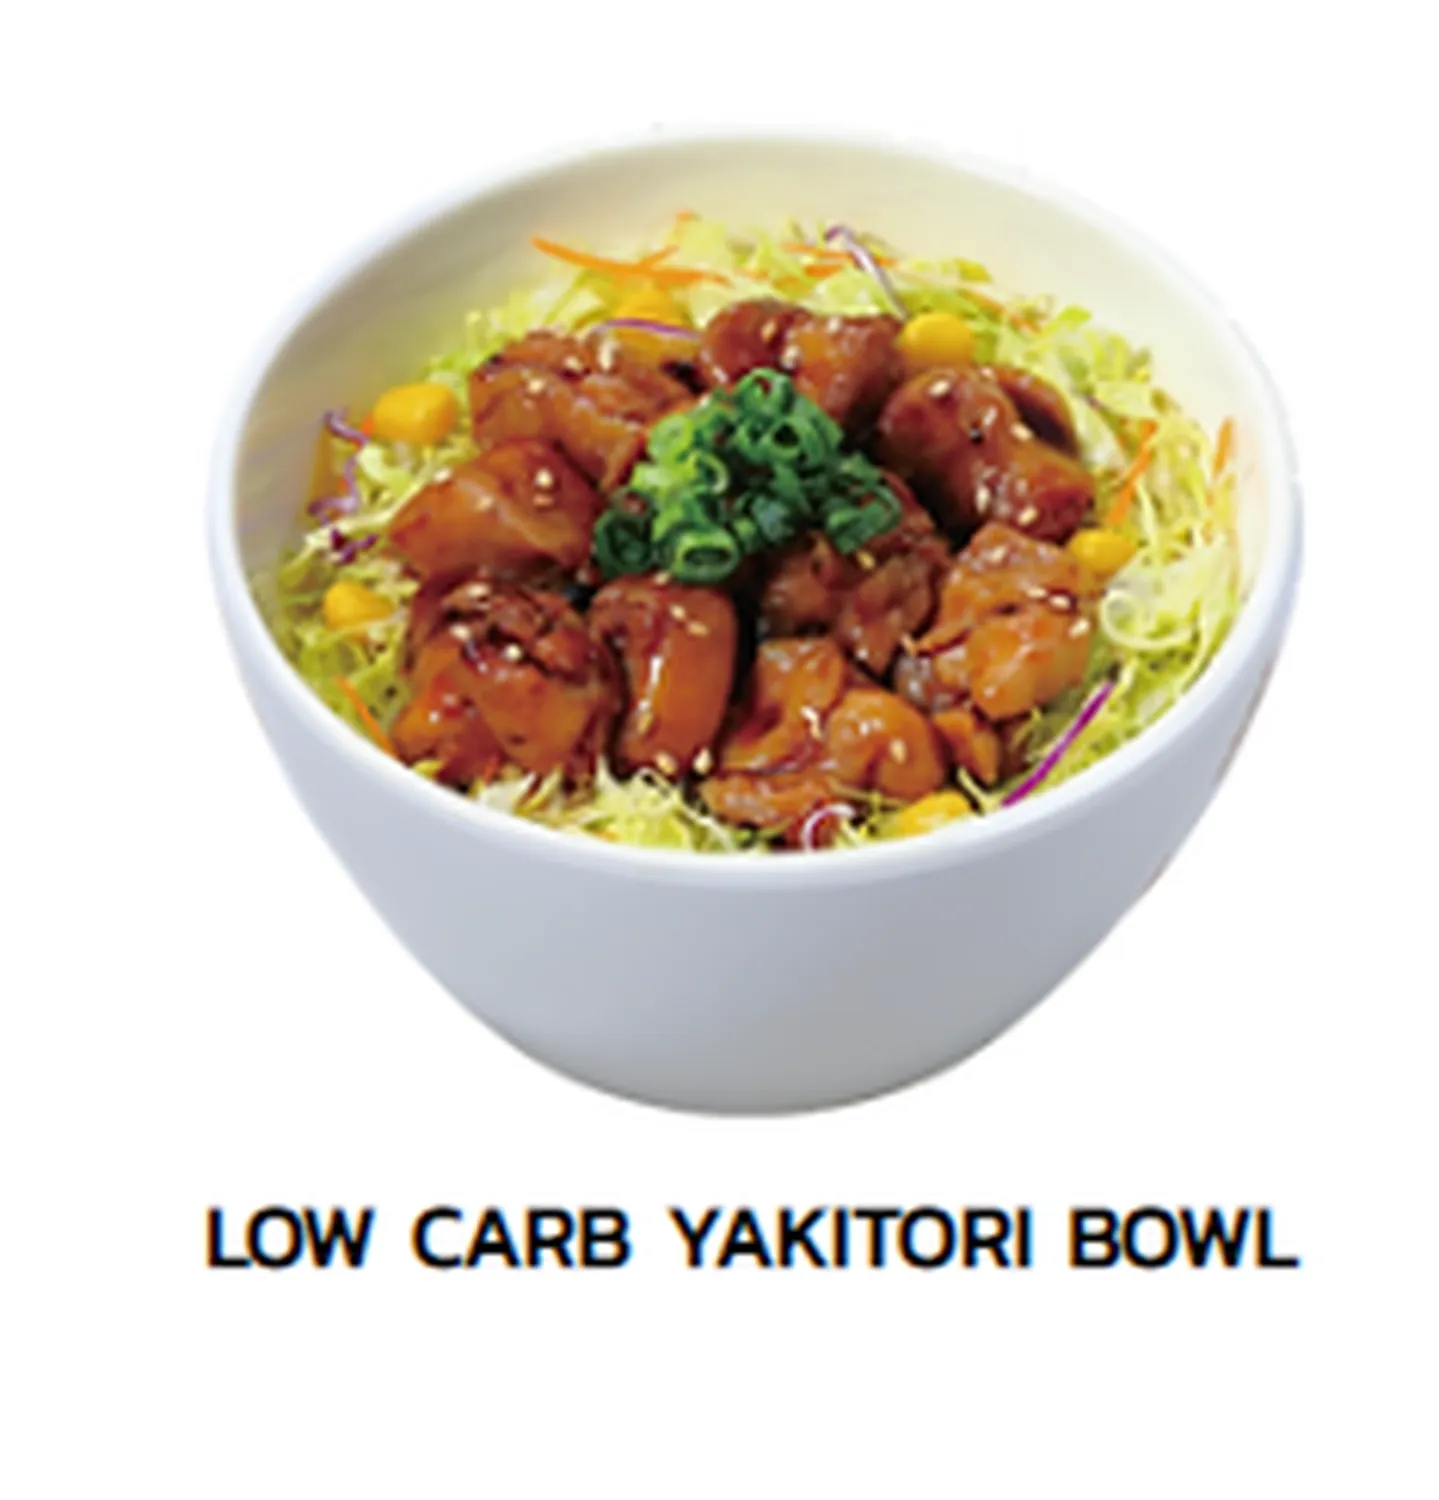 sukiya menu singapore low carb bowl japanese curry